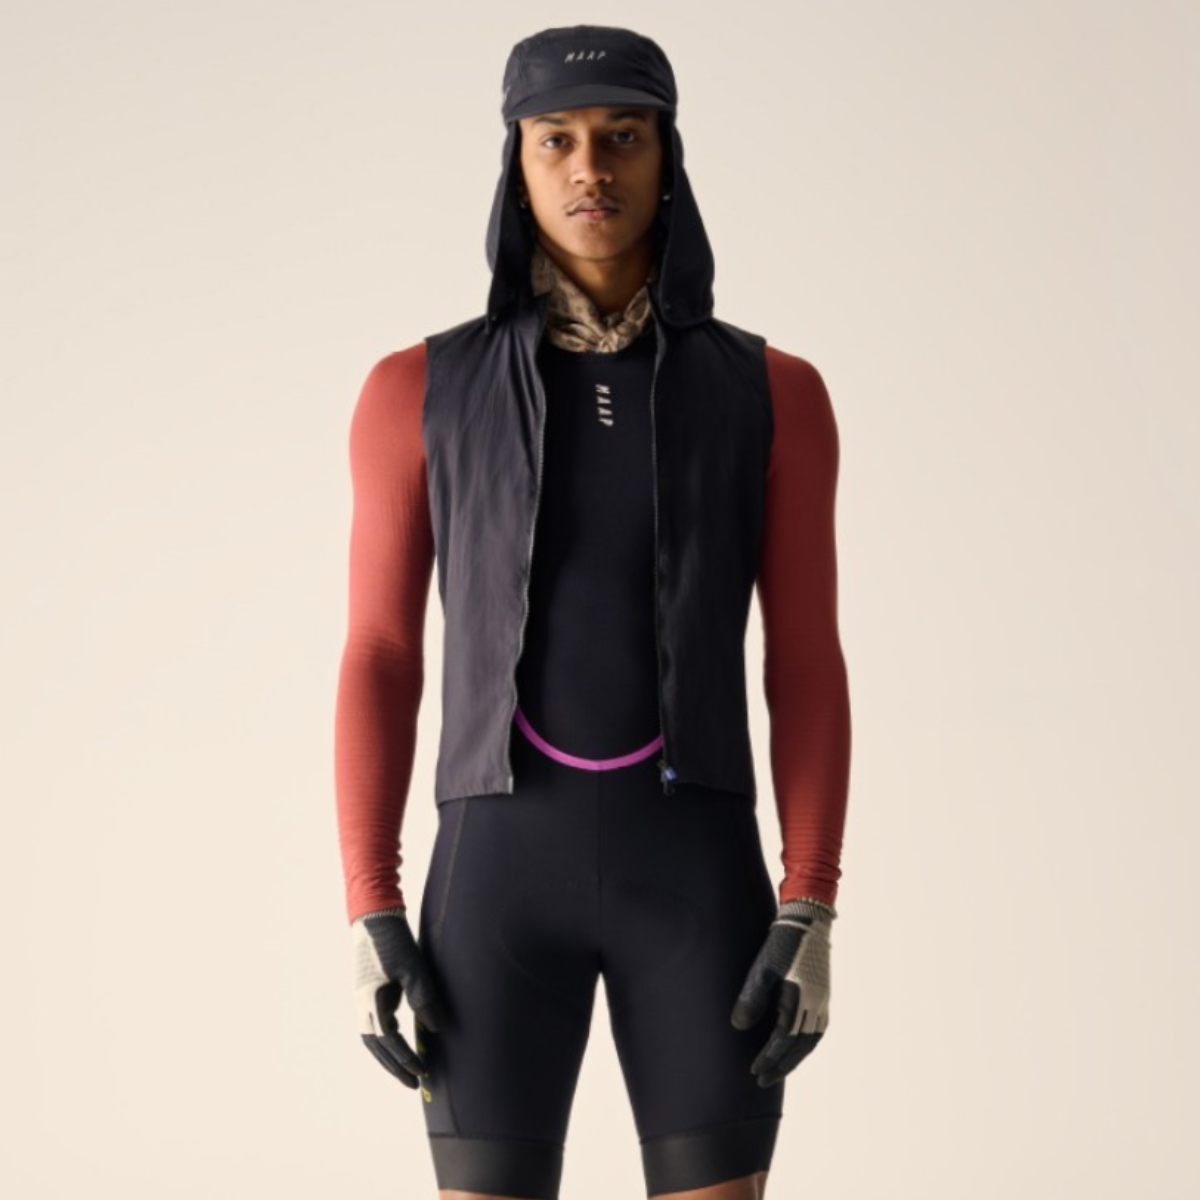 Man wearing MAAP cycling clothing brand